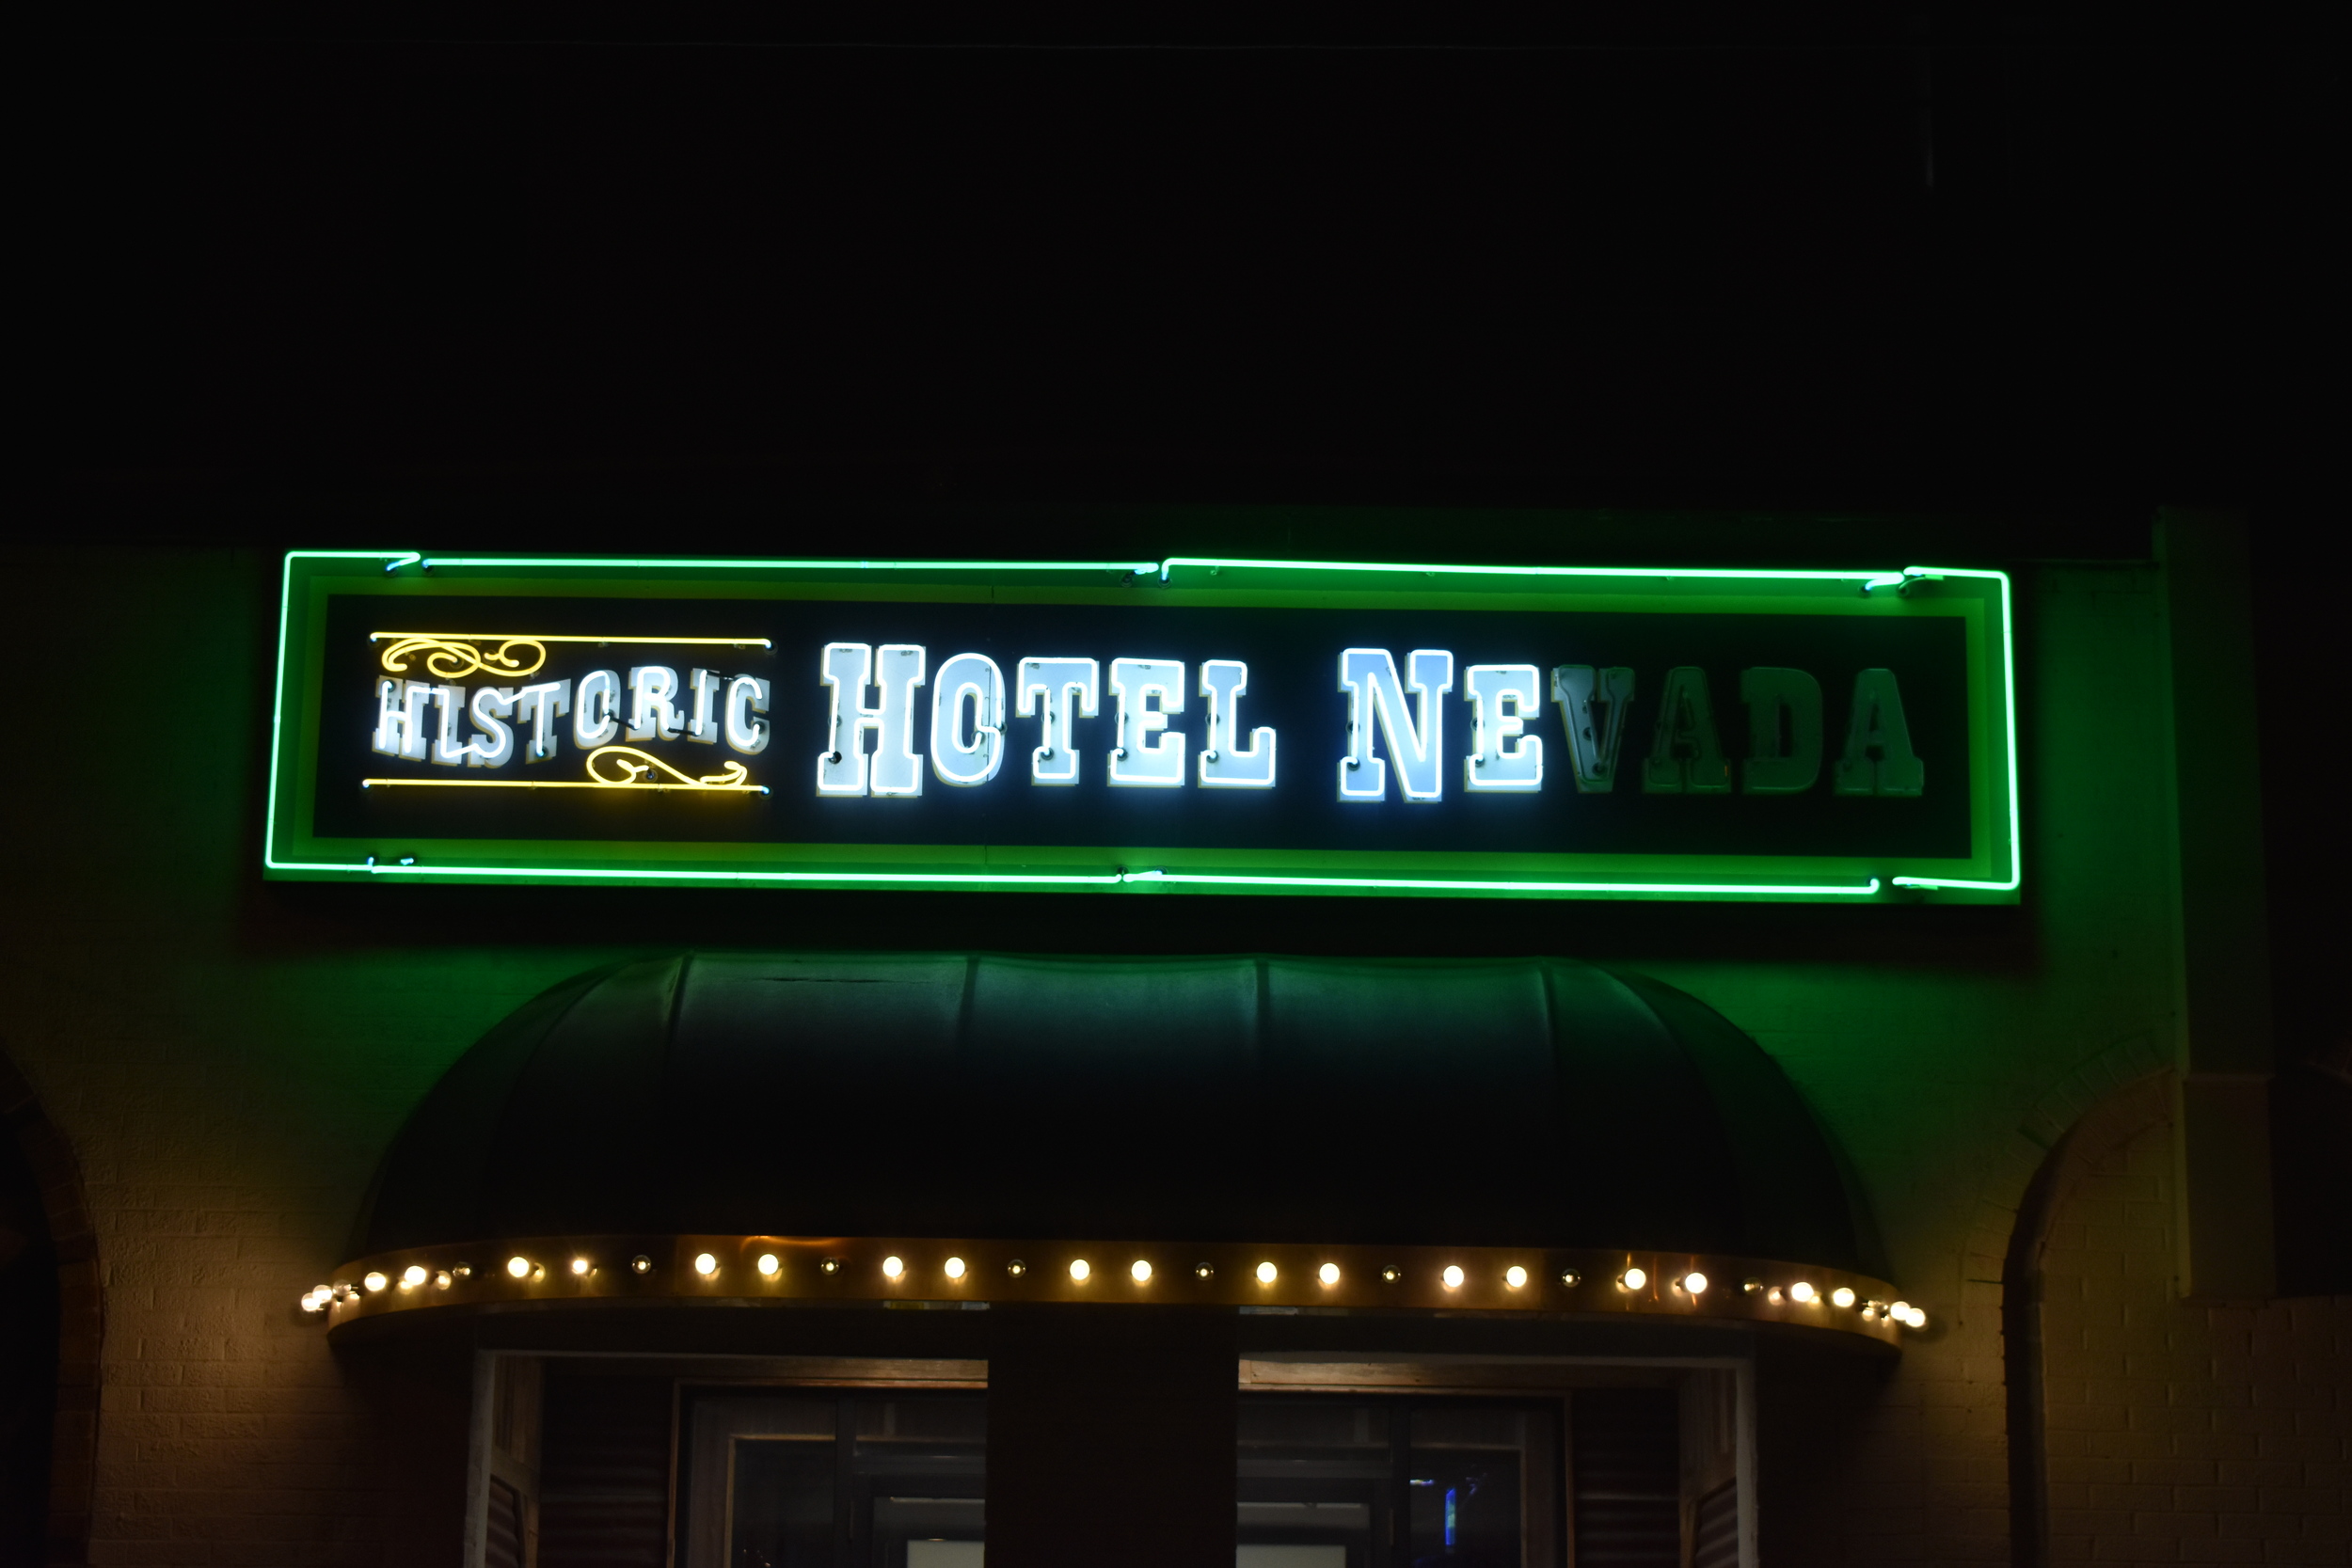 Hotel Nevada wall mounted sign, Ely, Nevada